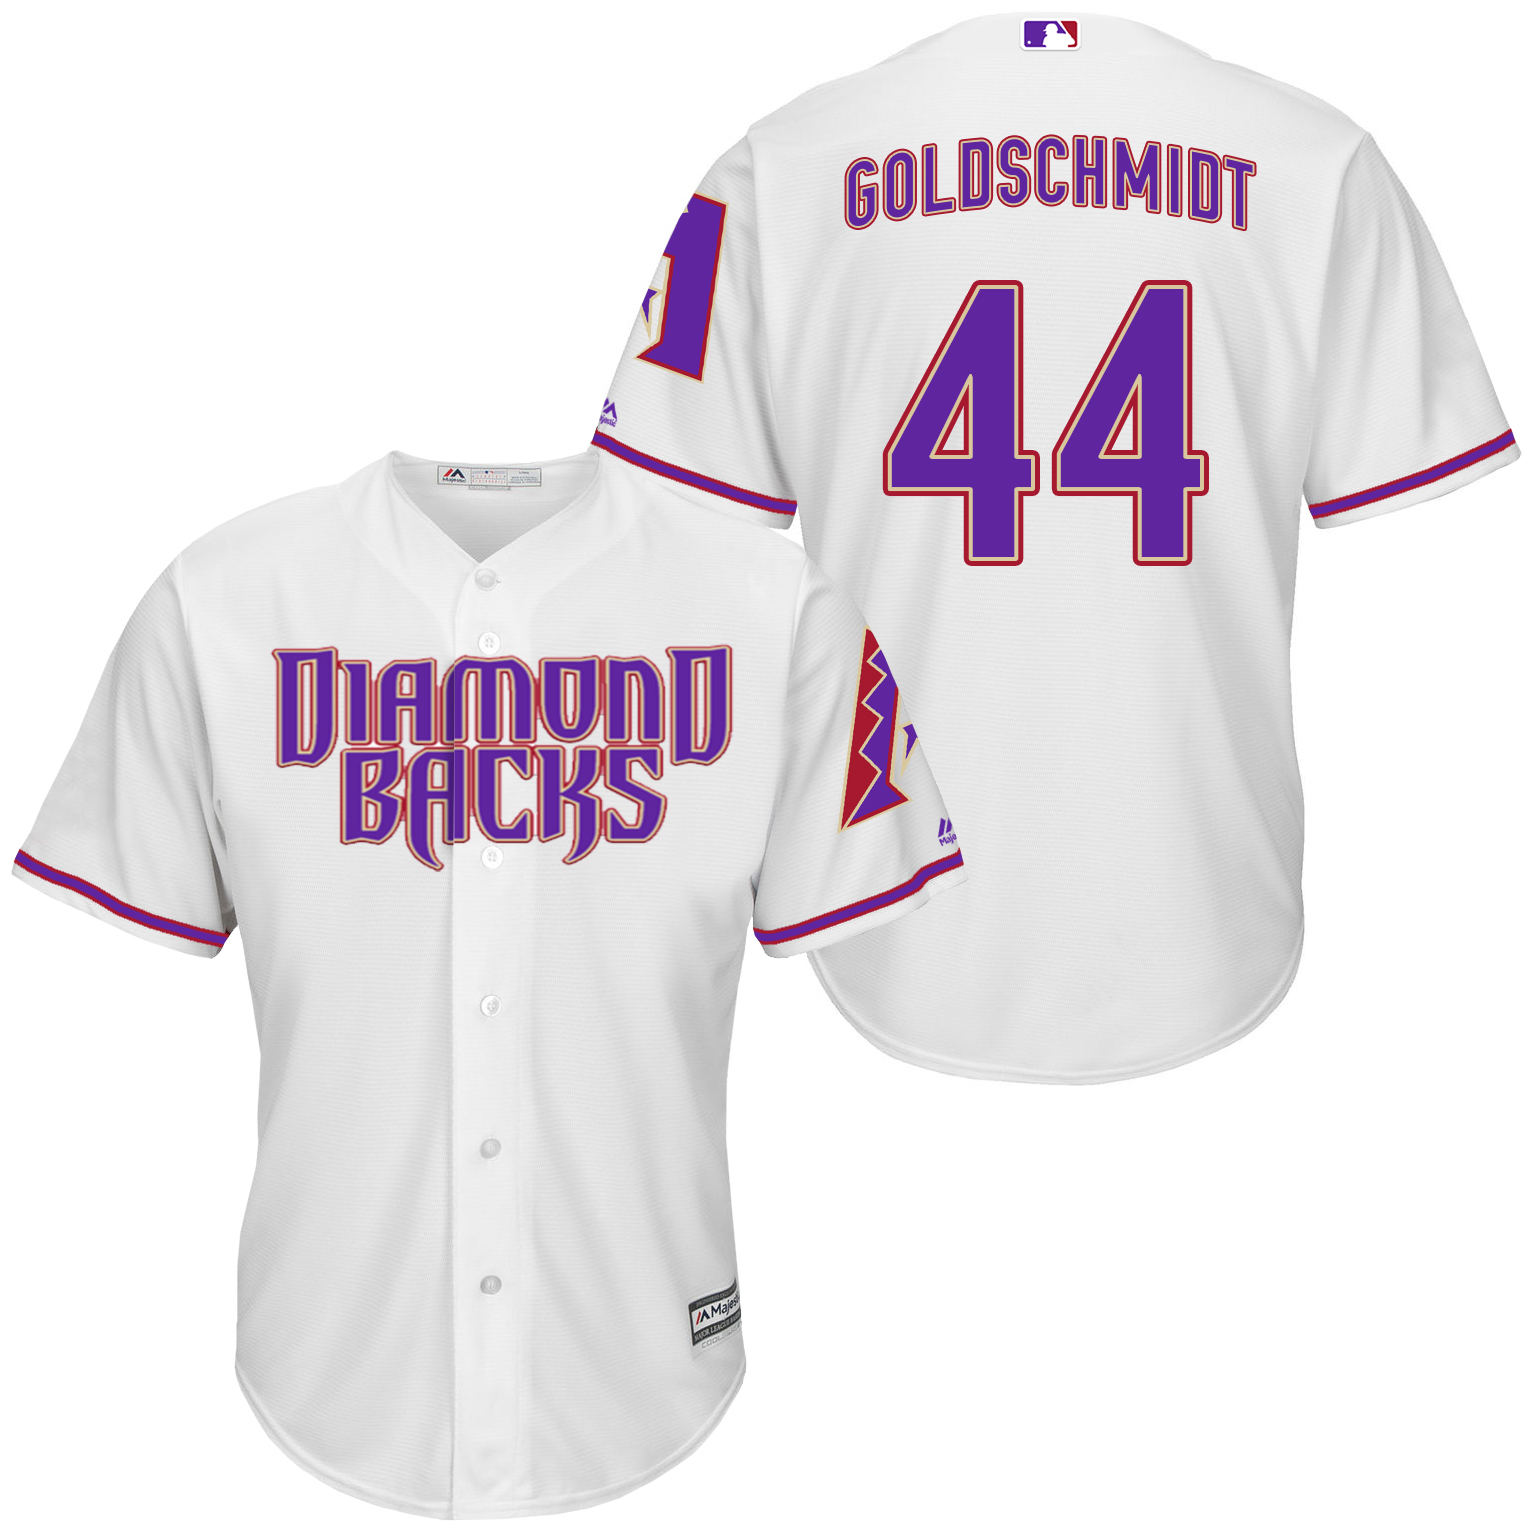 Diamondbacks 44 Paul Goldschmidt White Purple New Cool Base Jersey